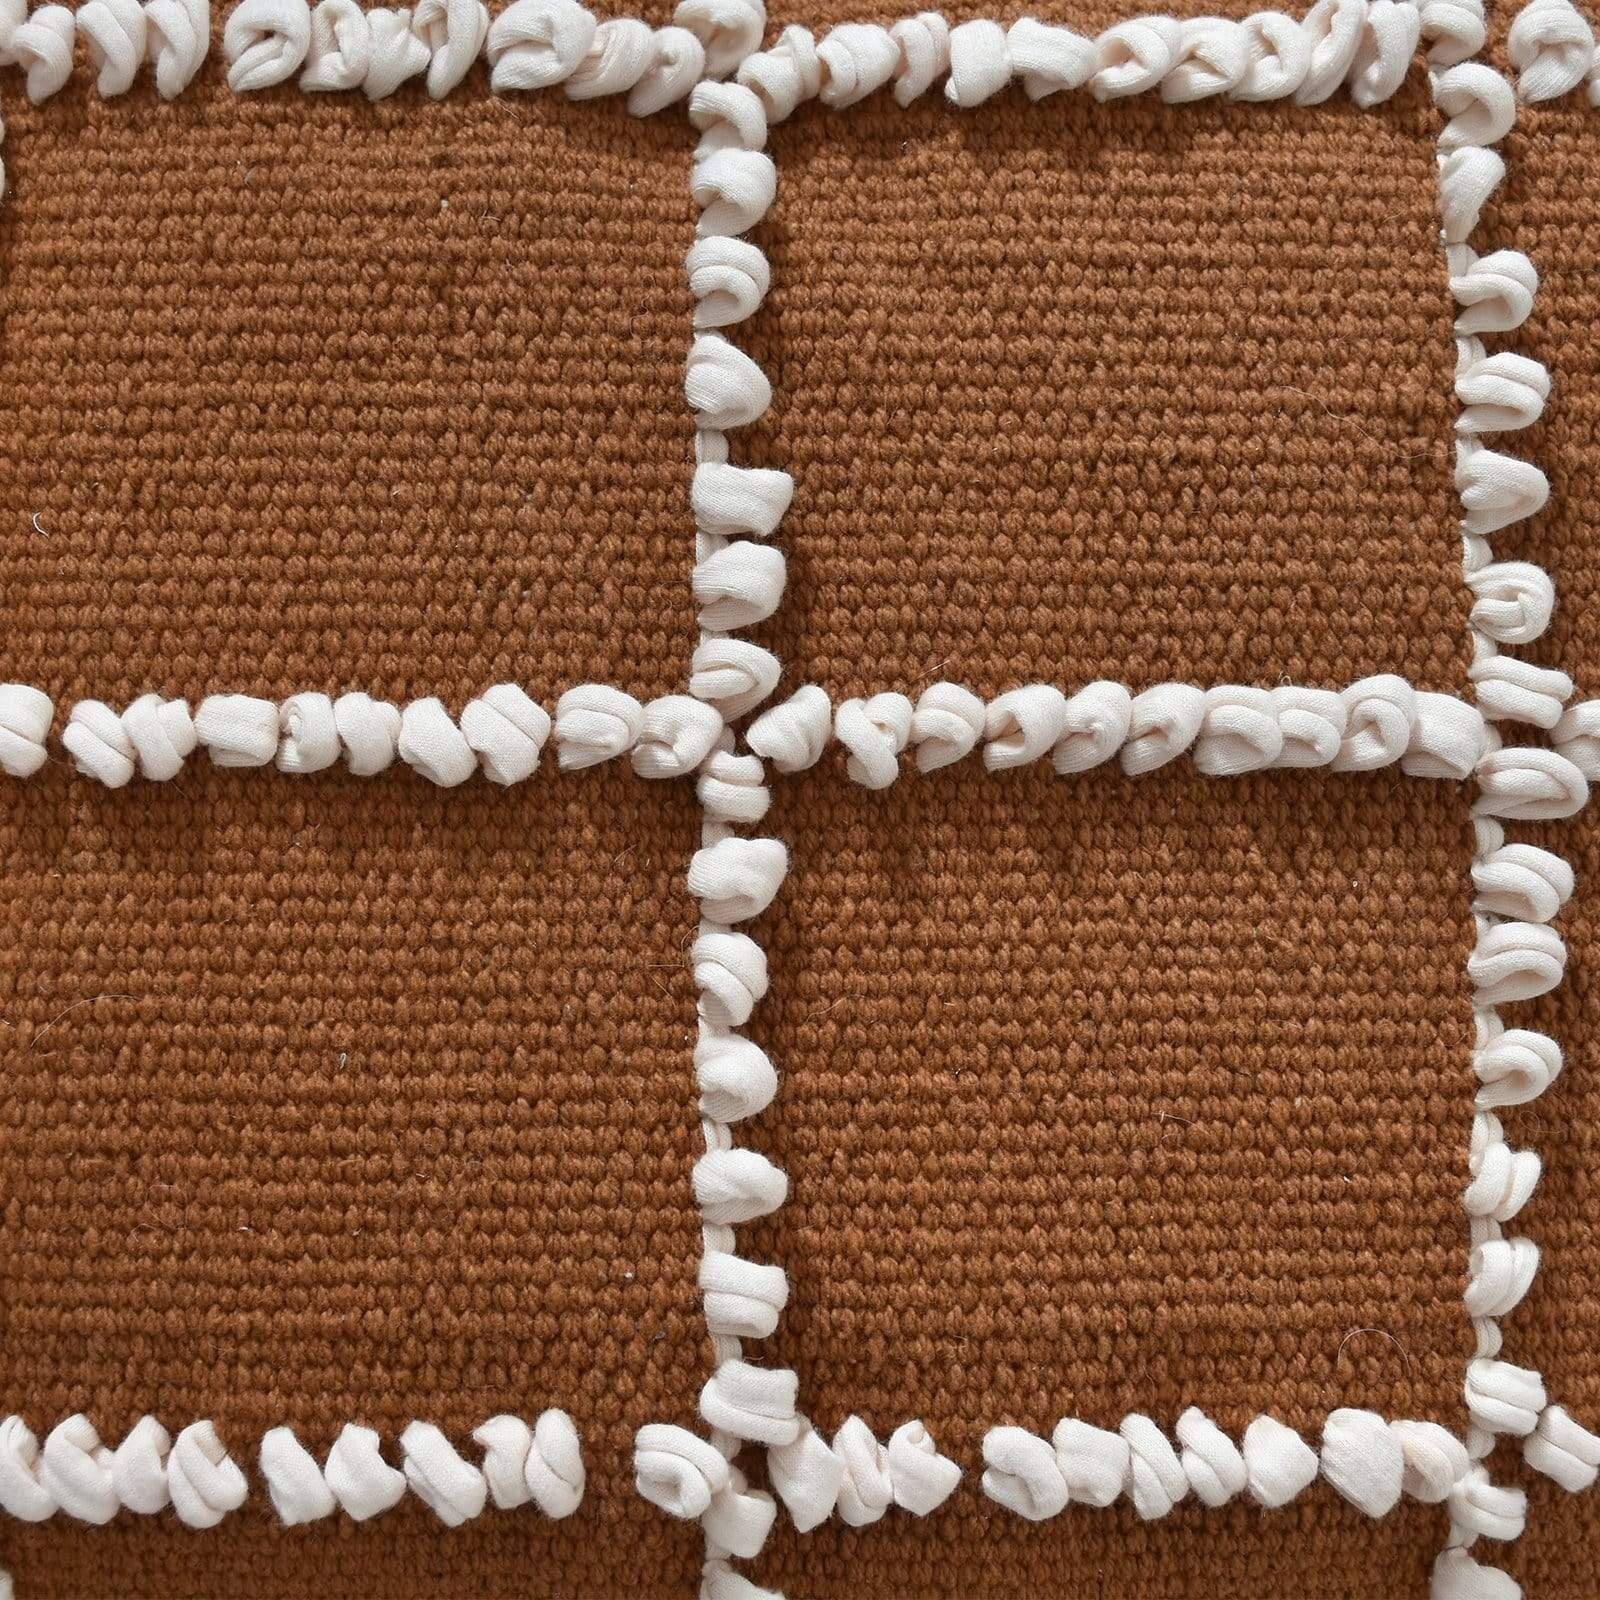 Baumwolle, Living handgefertigt aus x 40 60 cm, Dekokissen in LaLe Terrakotta Kissenhülle Pelin